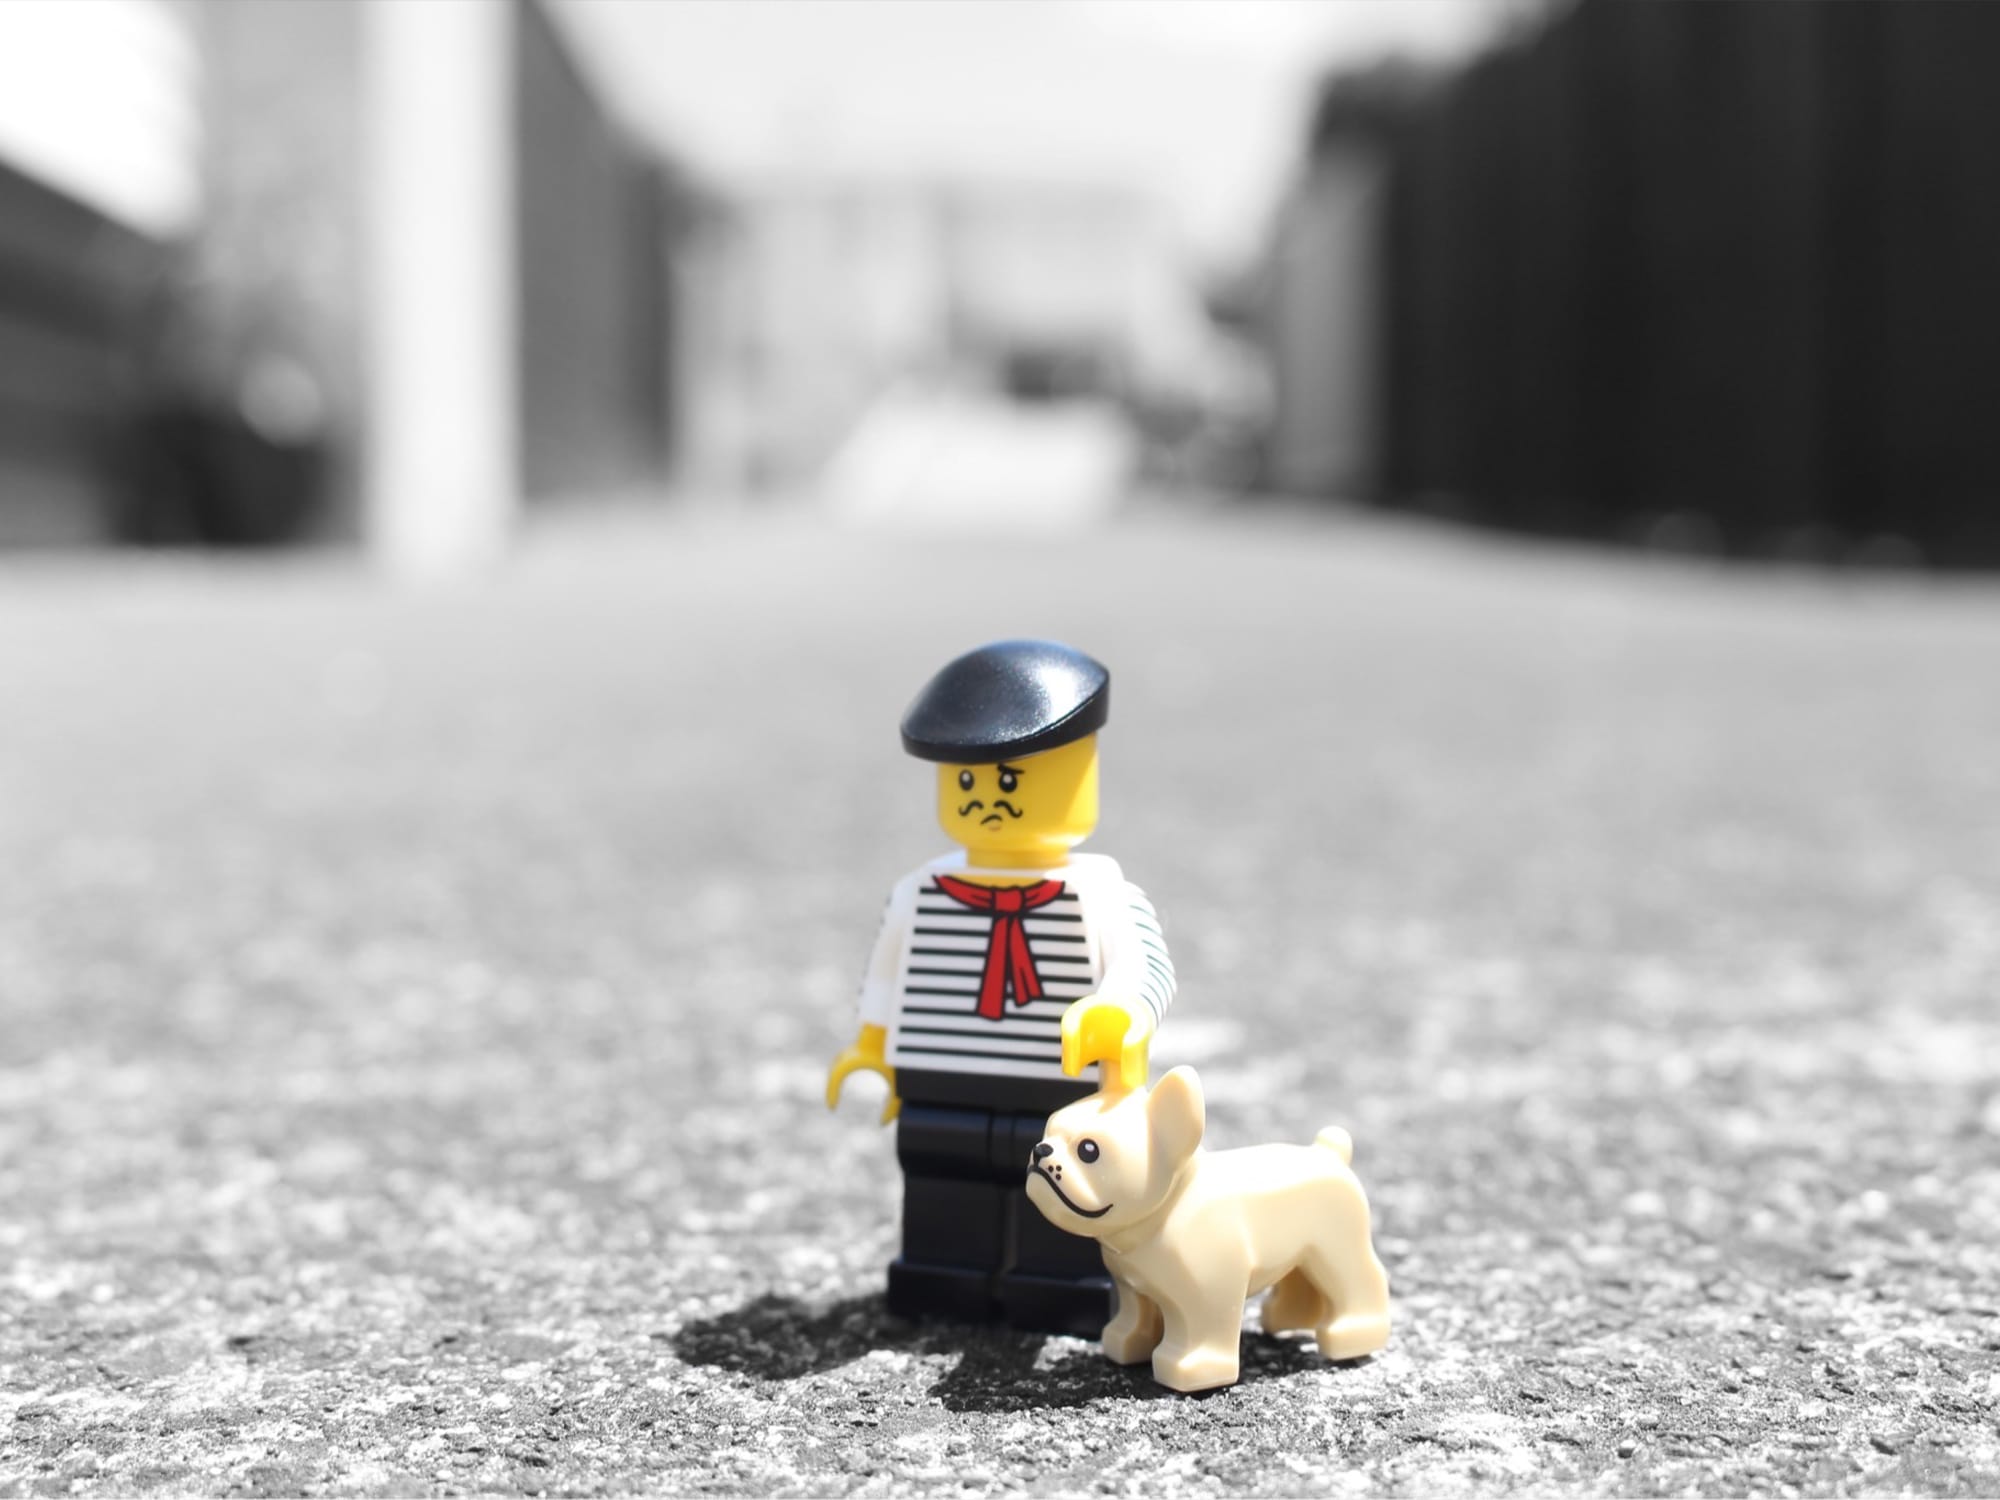 Journey into LEGO photography